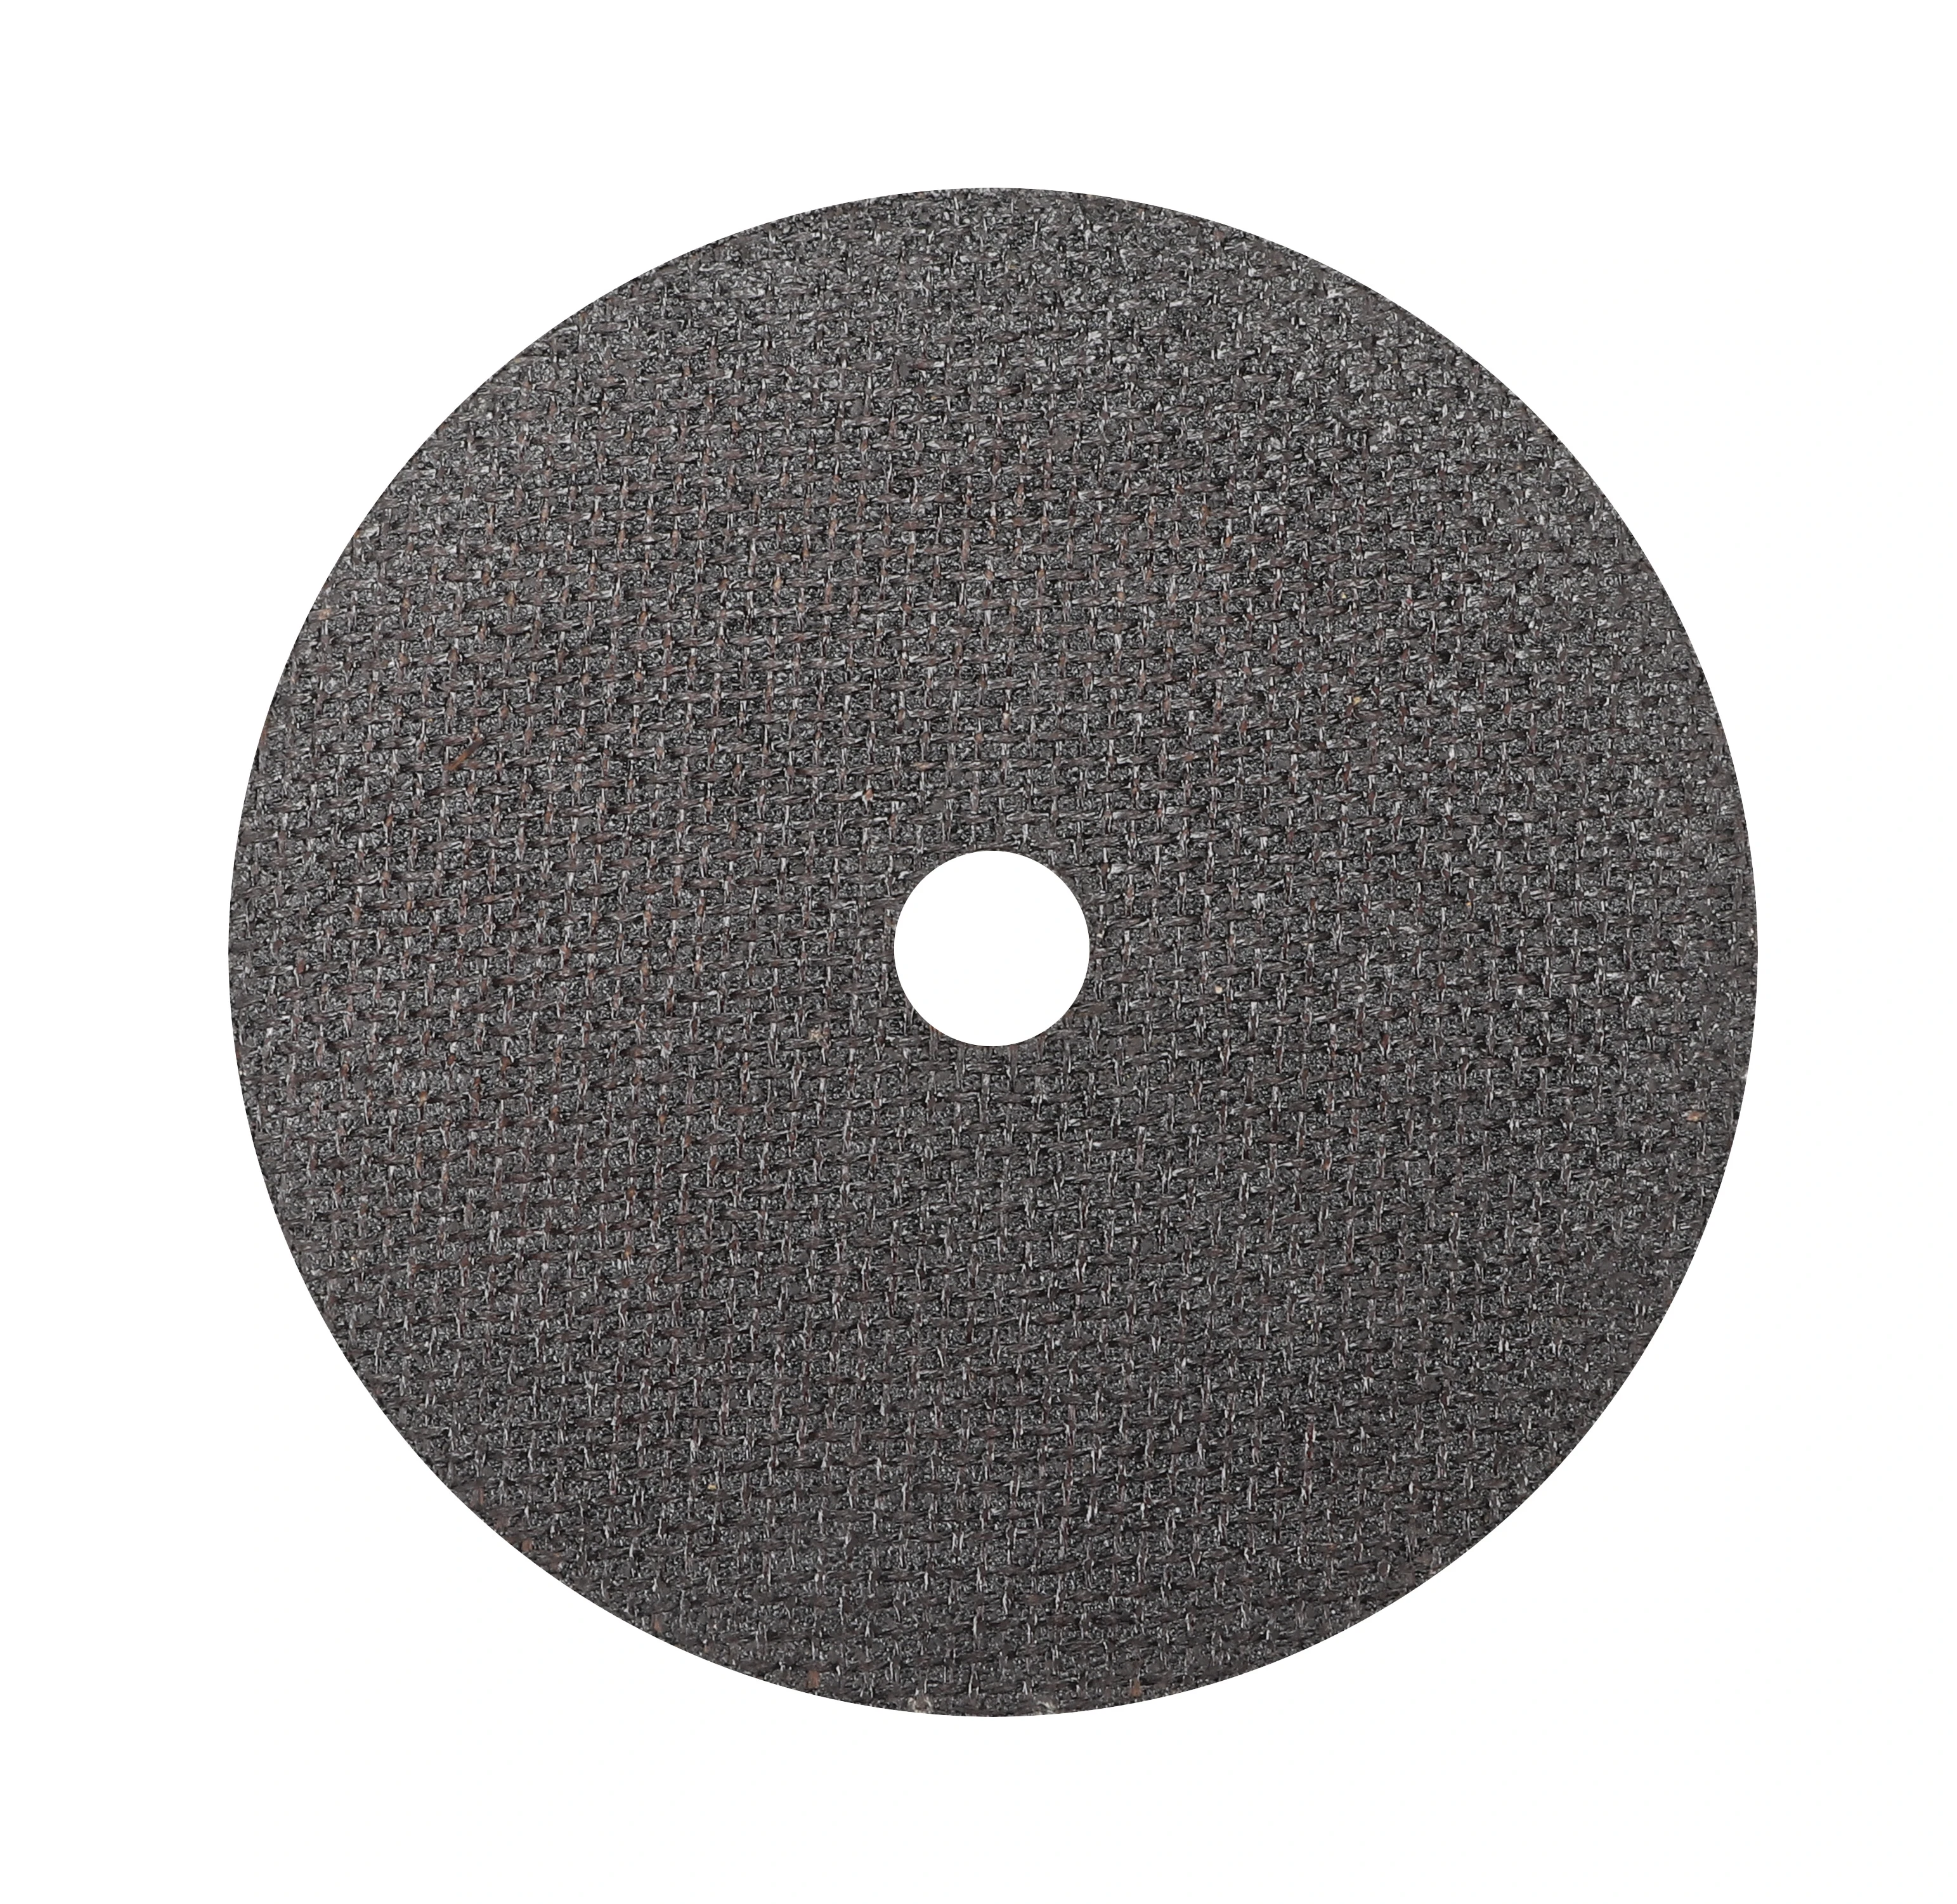 Cut off Flap Tool Metal Abrasive Polishing Grinding Cutting Disc For Steel